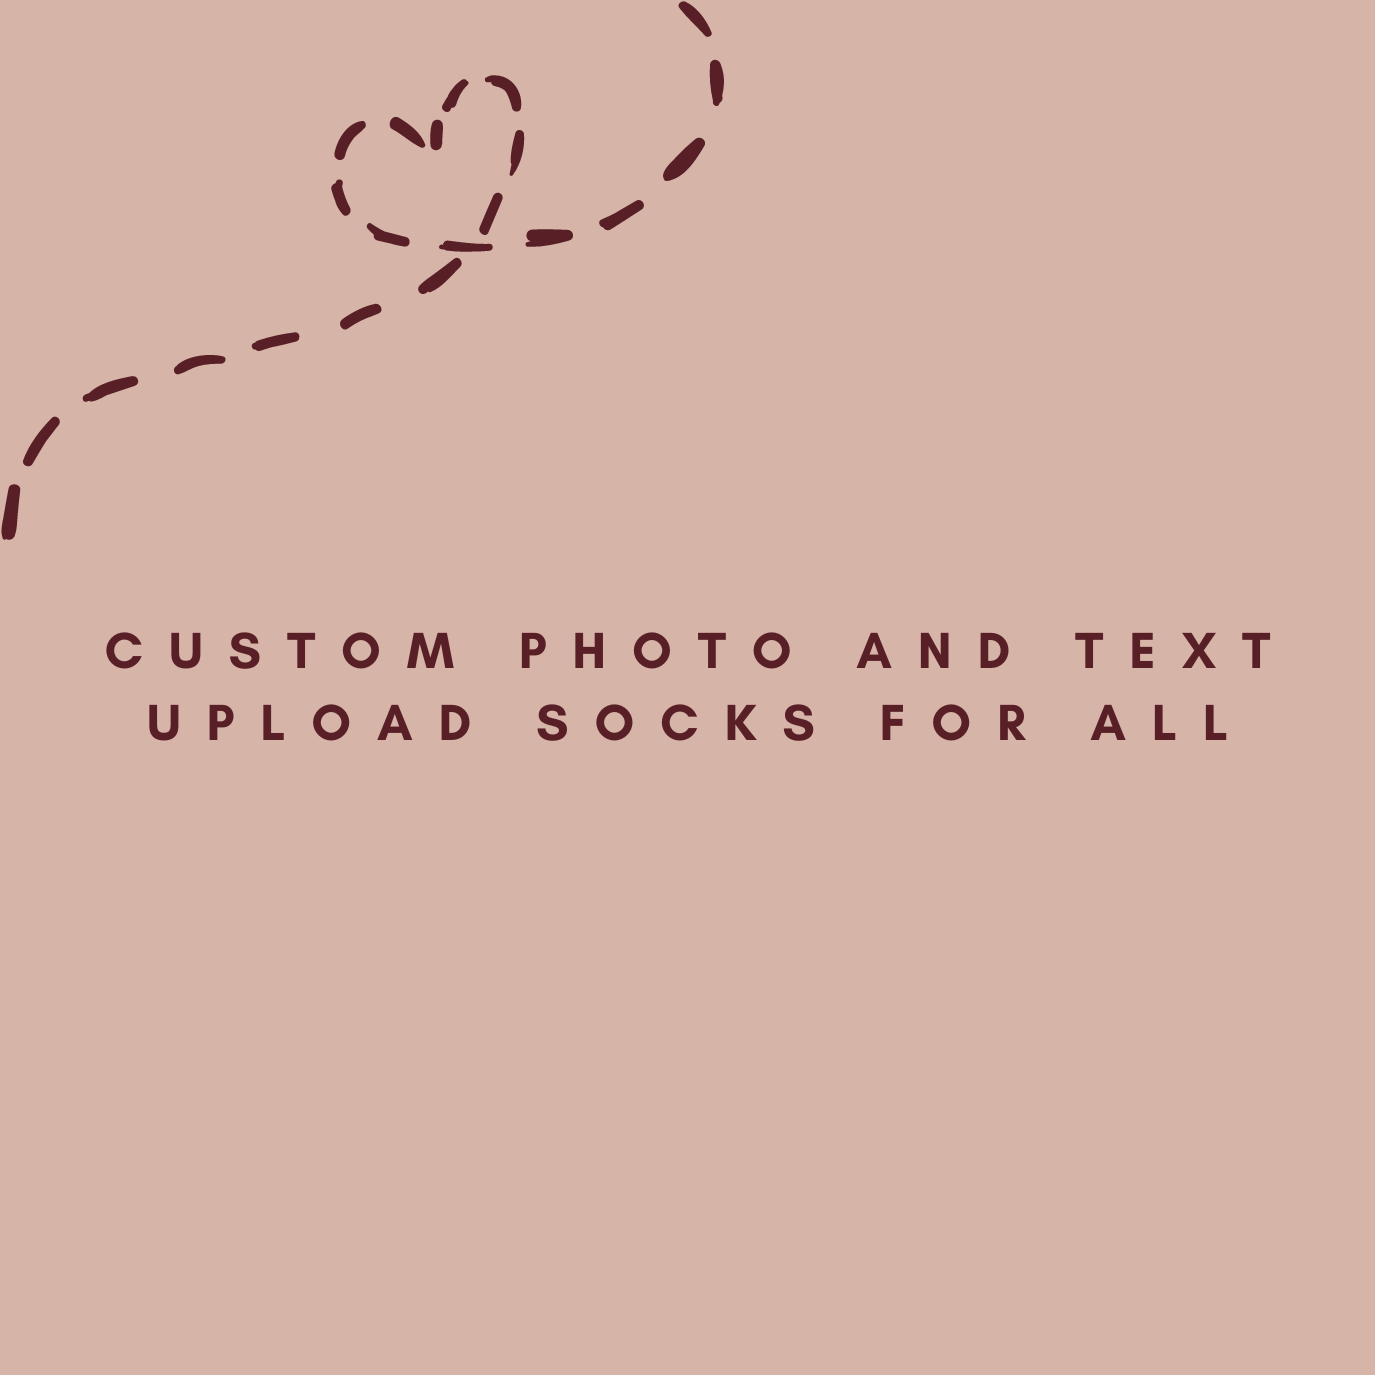 Custom Photo and Text Upload Socks